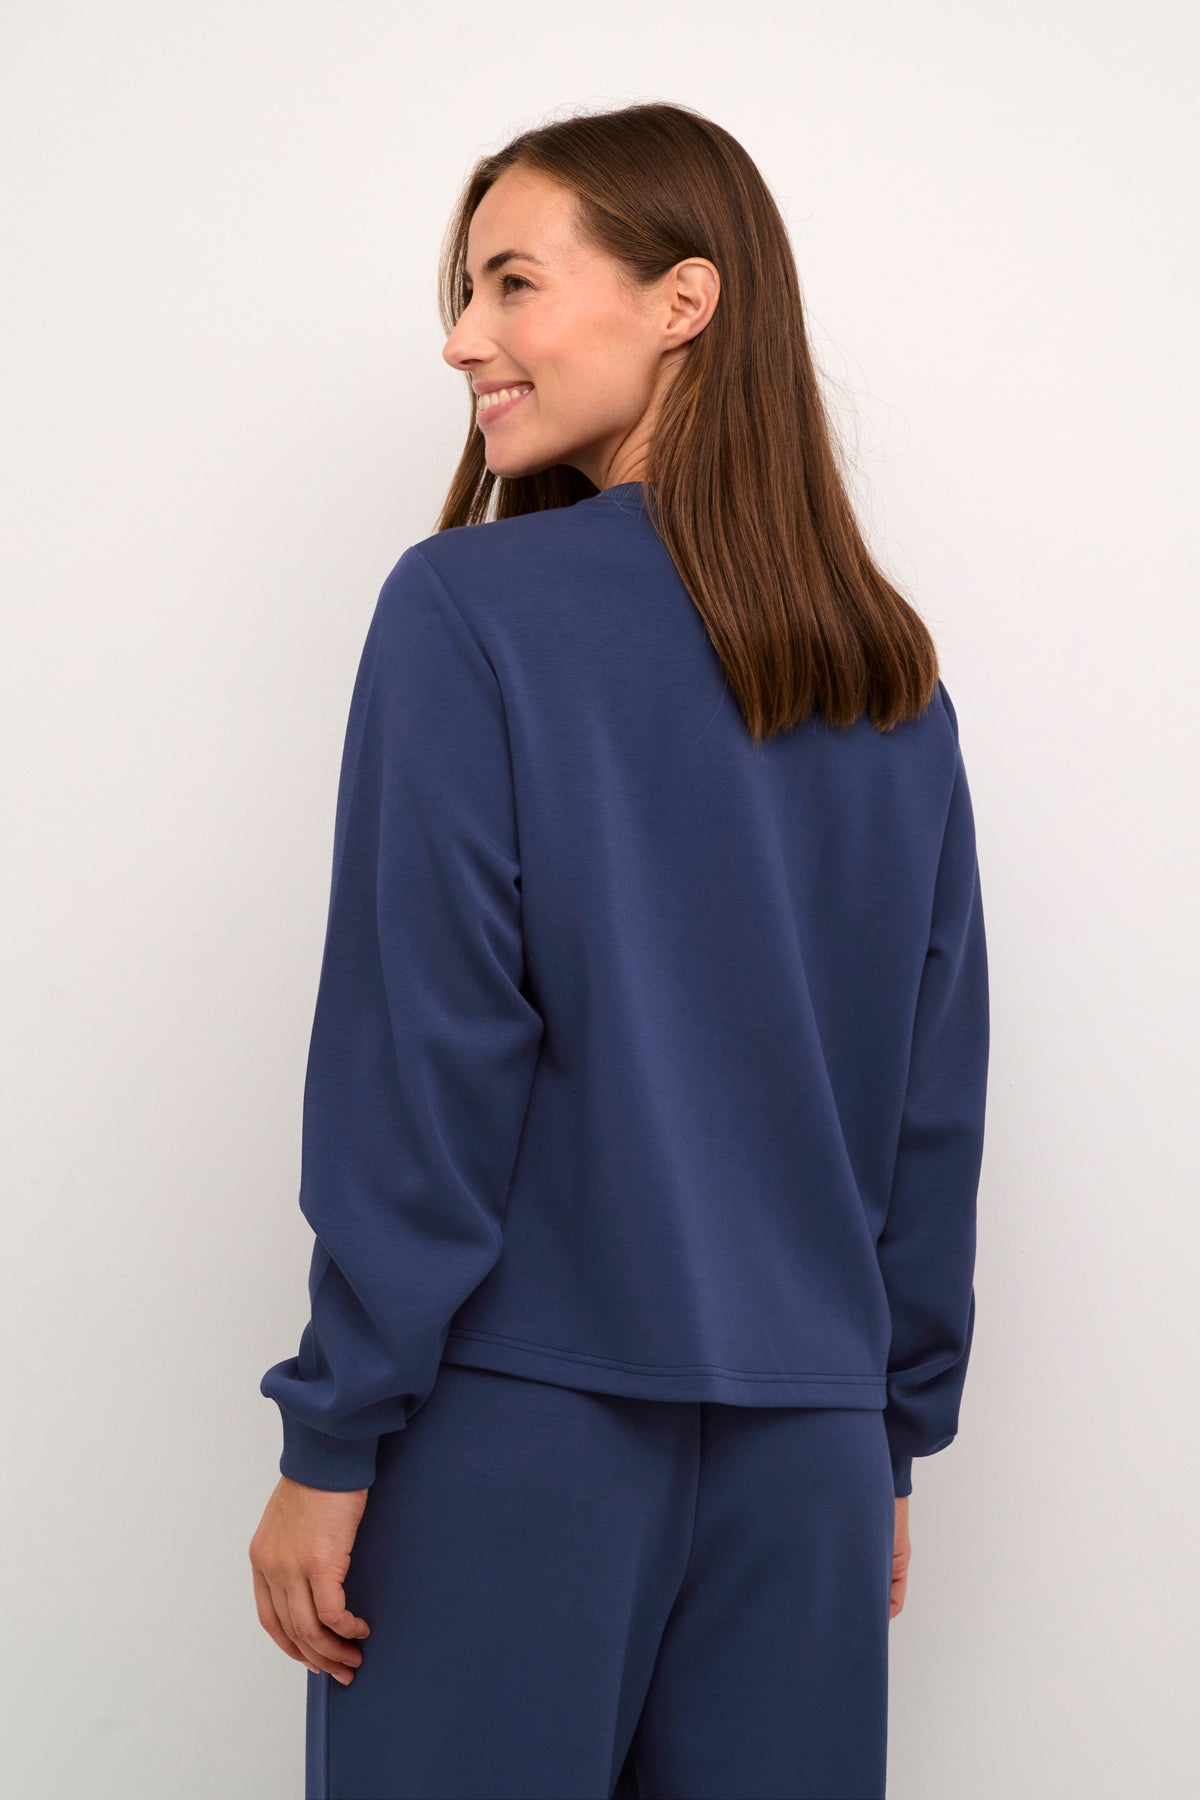 Chabrina Long Sleeve Sweatshirt in Dress Blues